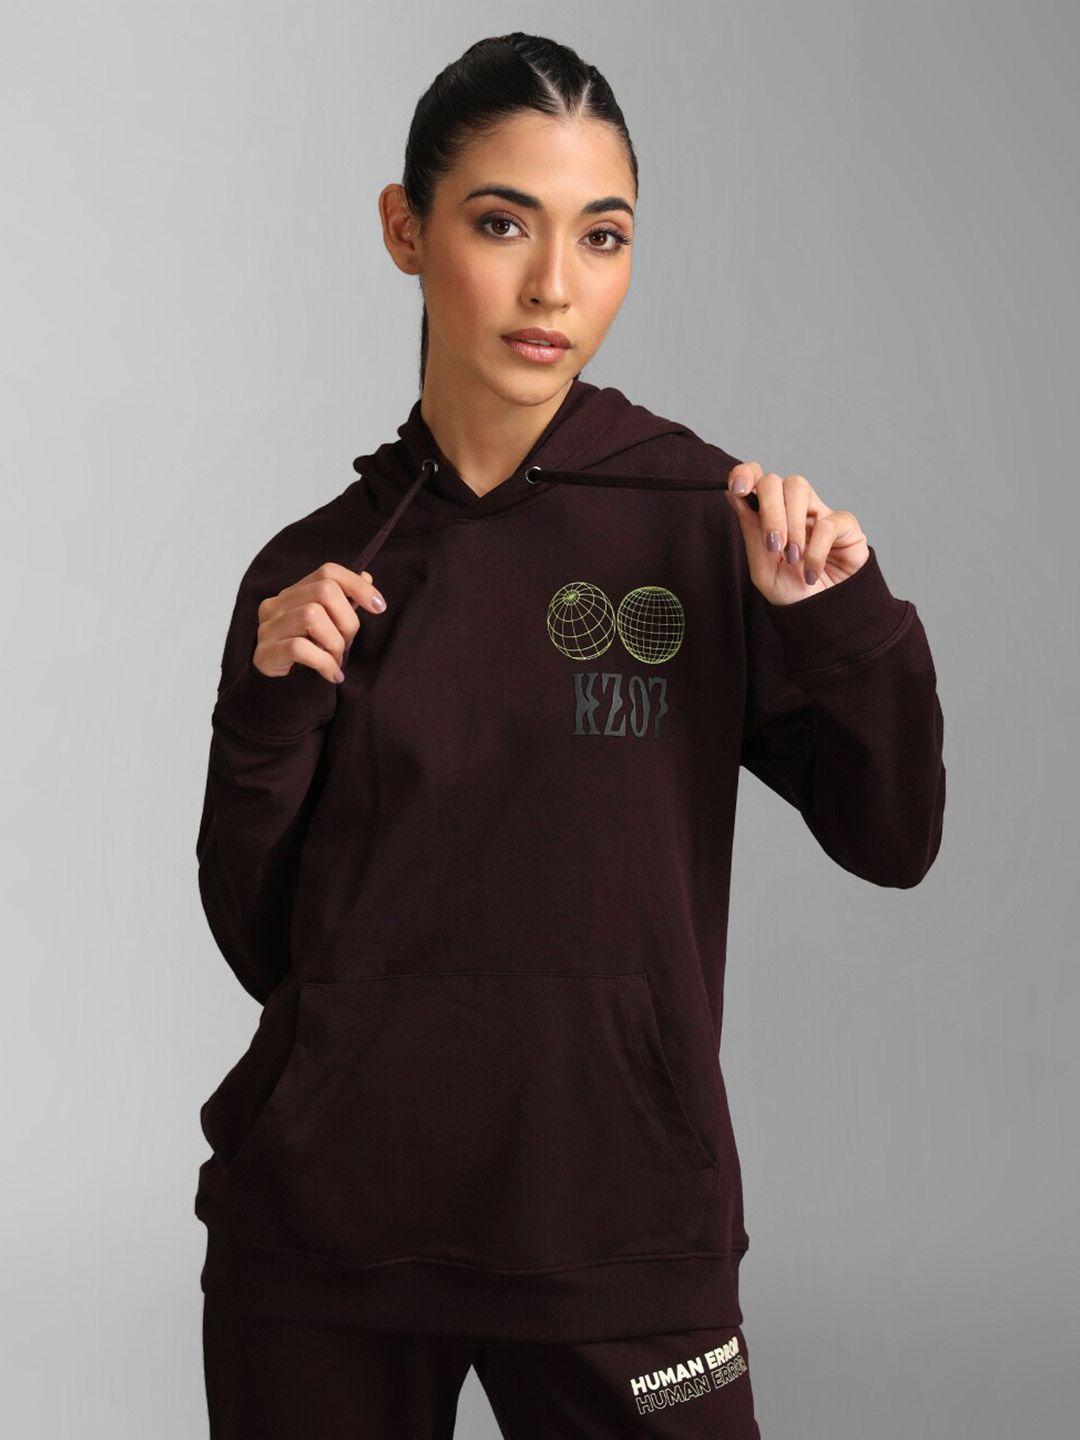 kz07 by kazo women brown hooded cotton sweatshirt